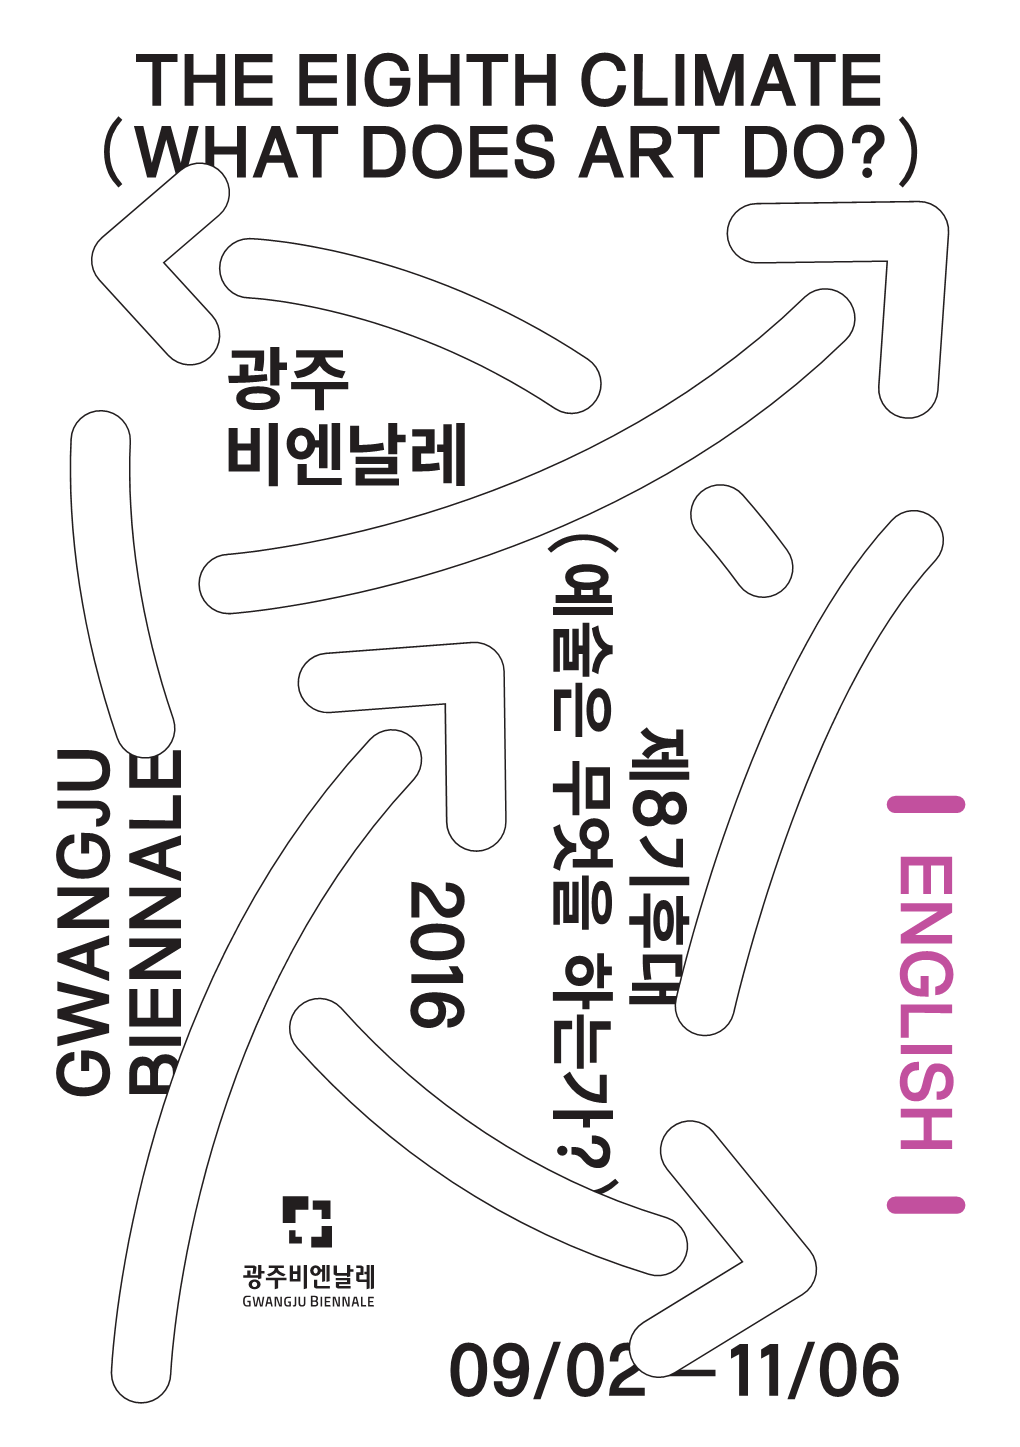 Exhibition Venues Outside the Gwangju Biennale